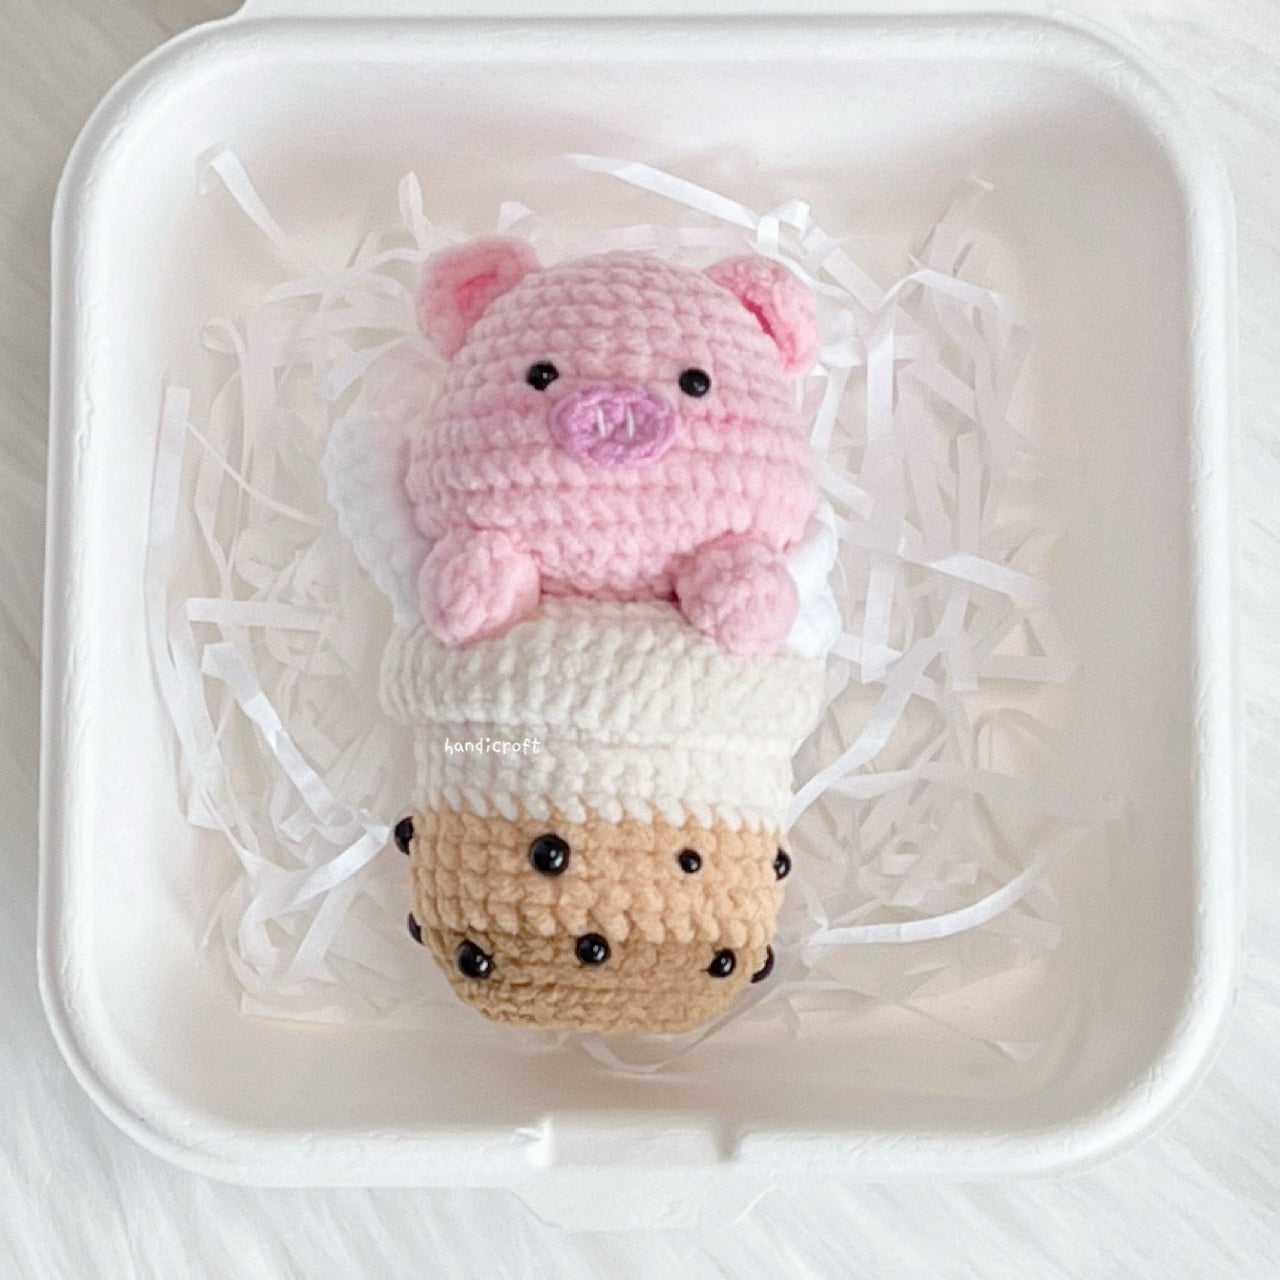 crochet bbt piggy keychain ₍ᐢ･⚇･ᐢ₎🧋